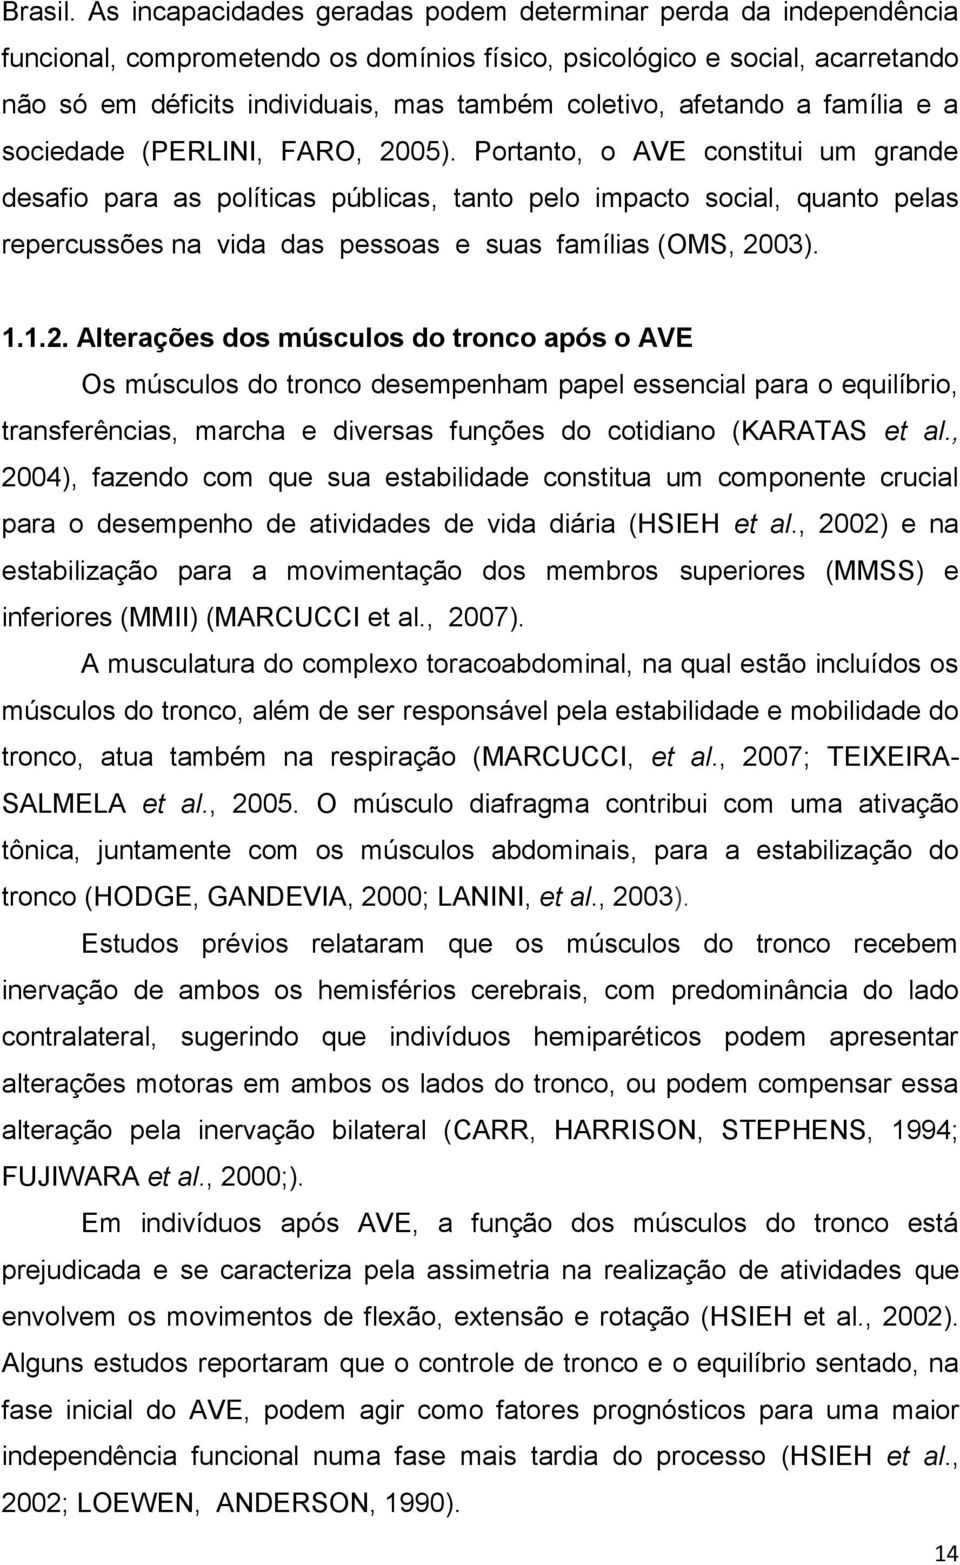 afetando a família e a sociedade (PERLINI, FARO, 2005).